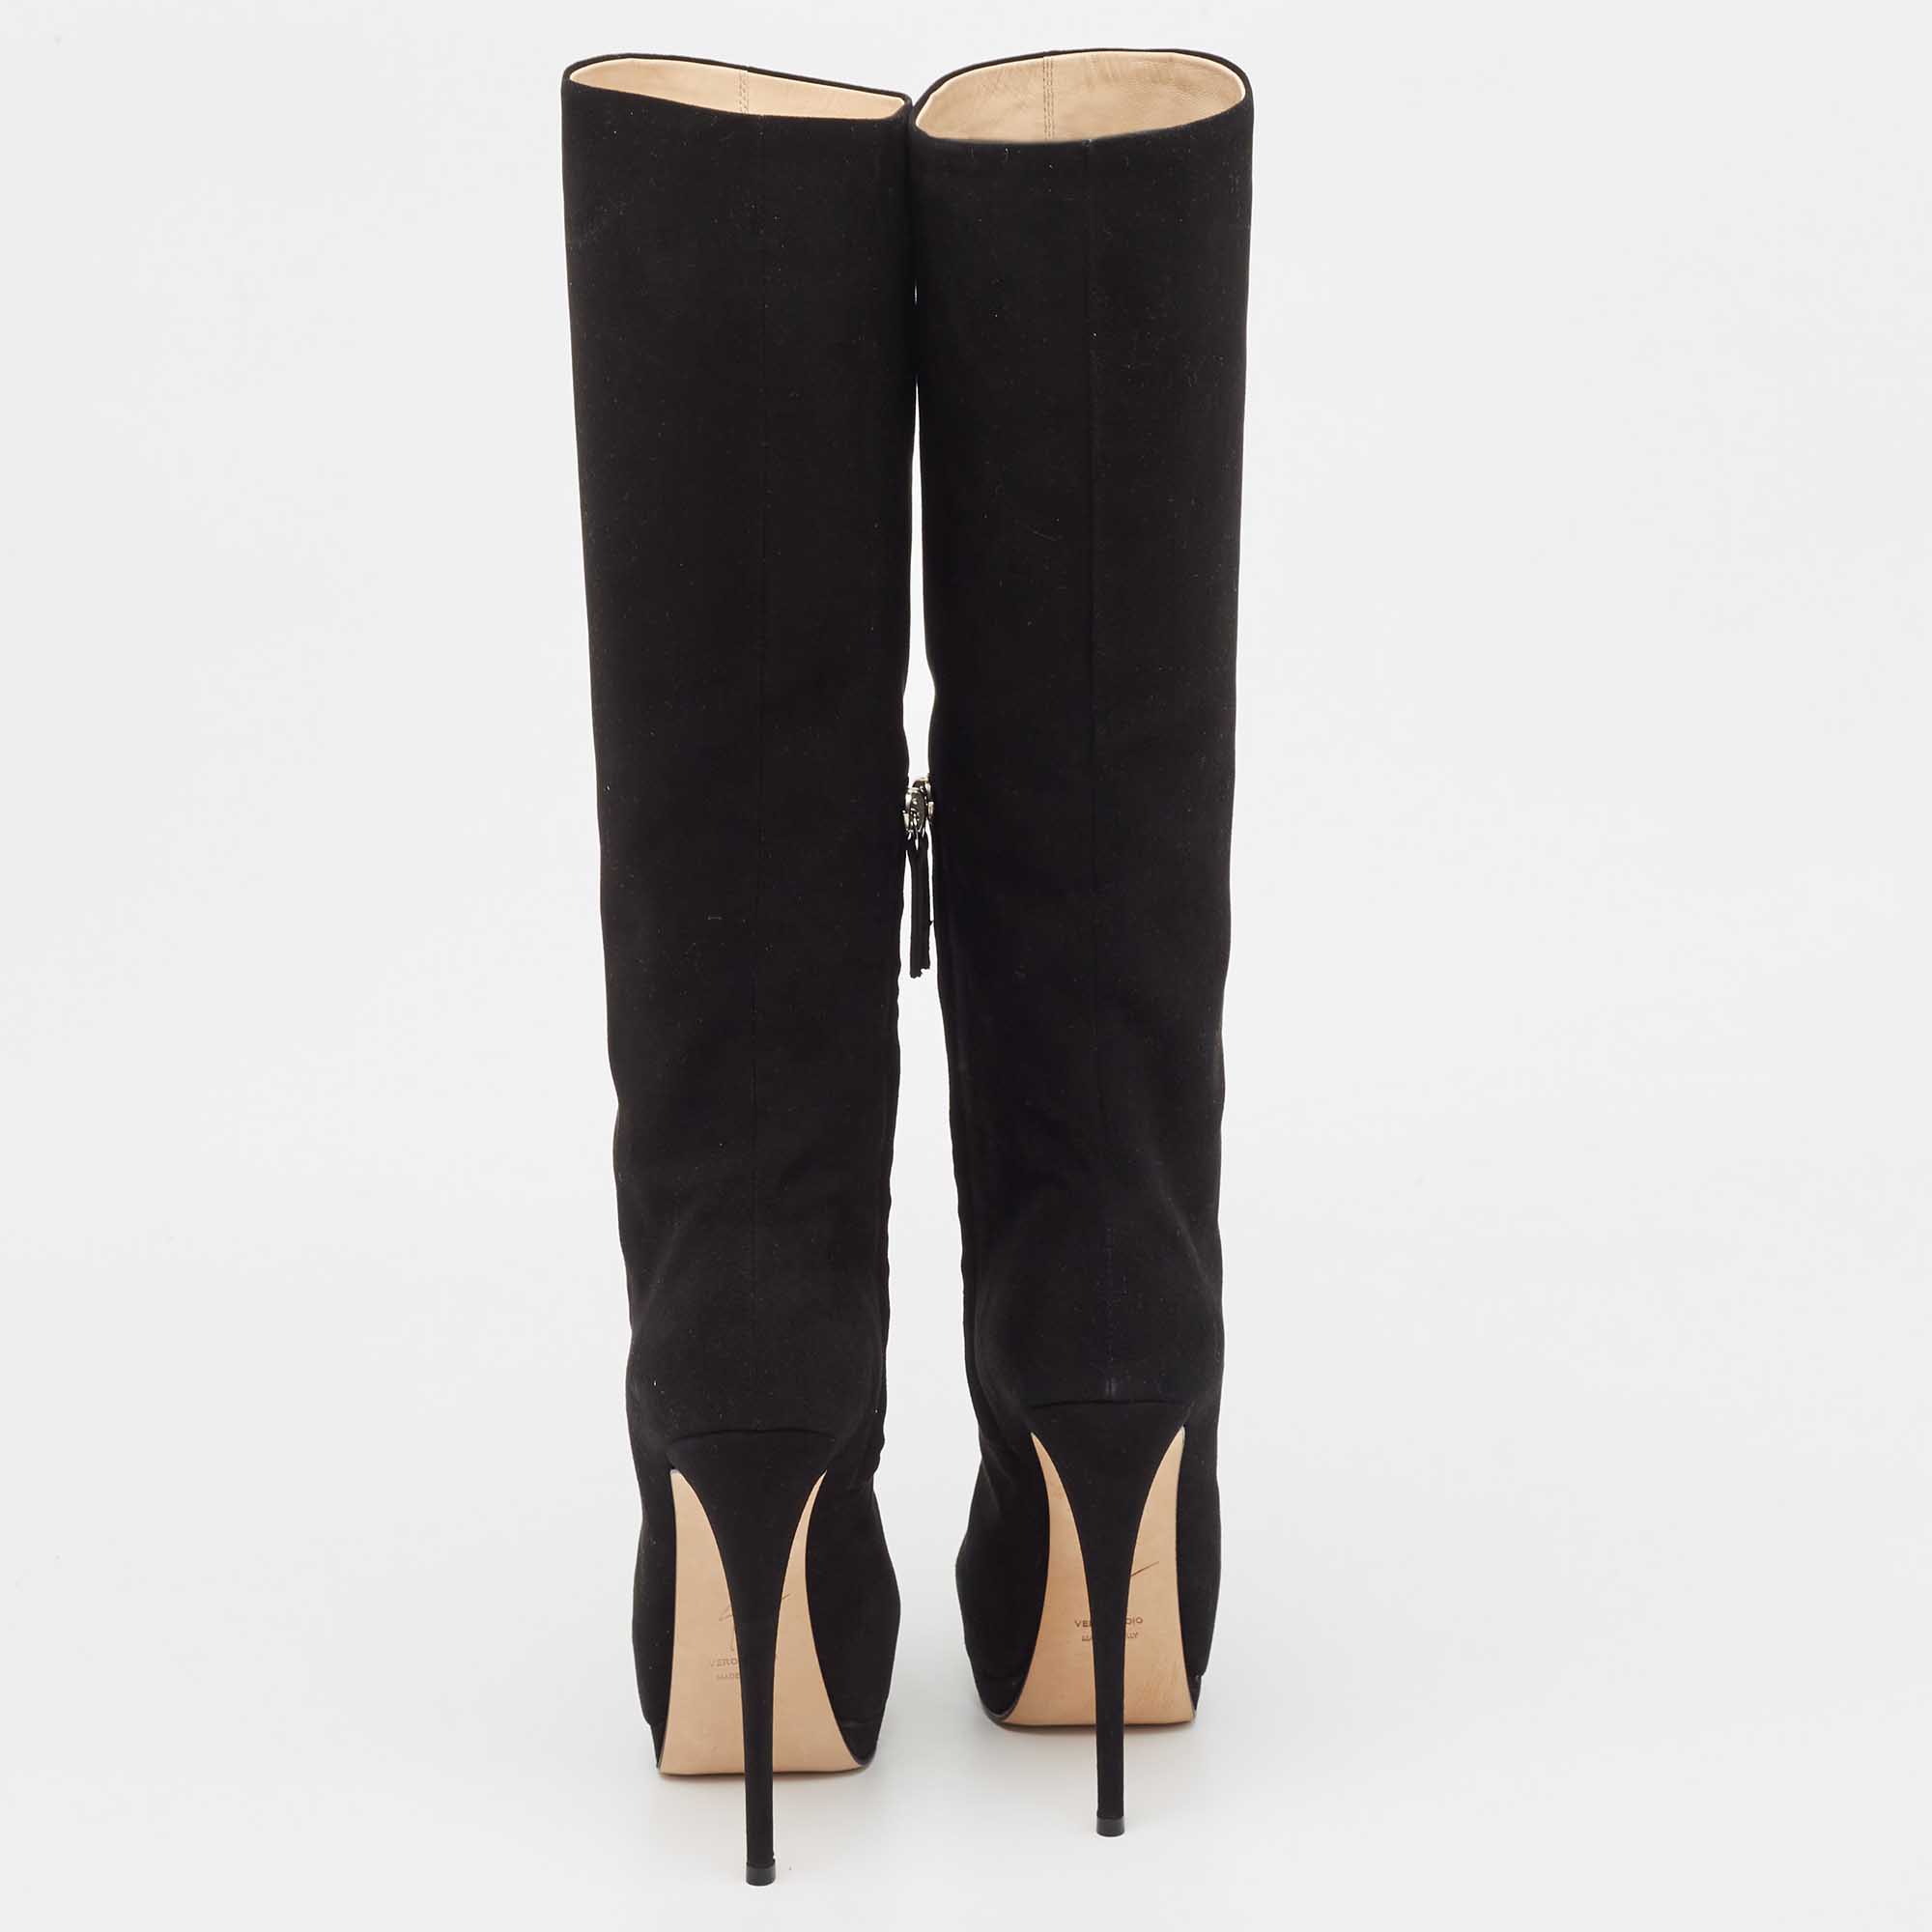 Giuseppe Zanotti Black Suede Knee Length Boots Size 36